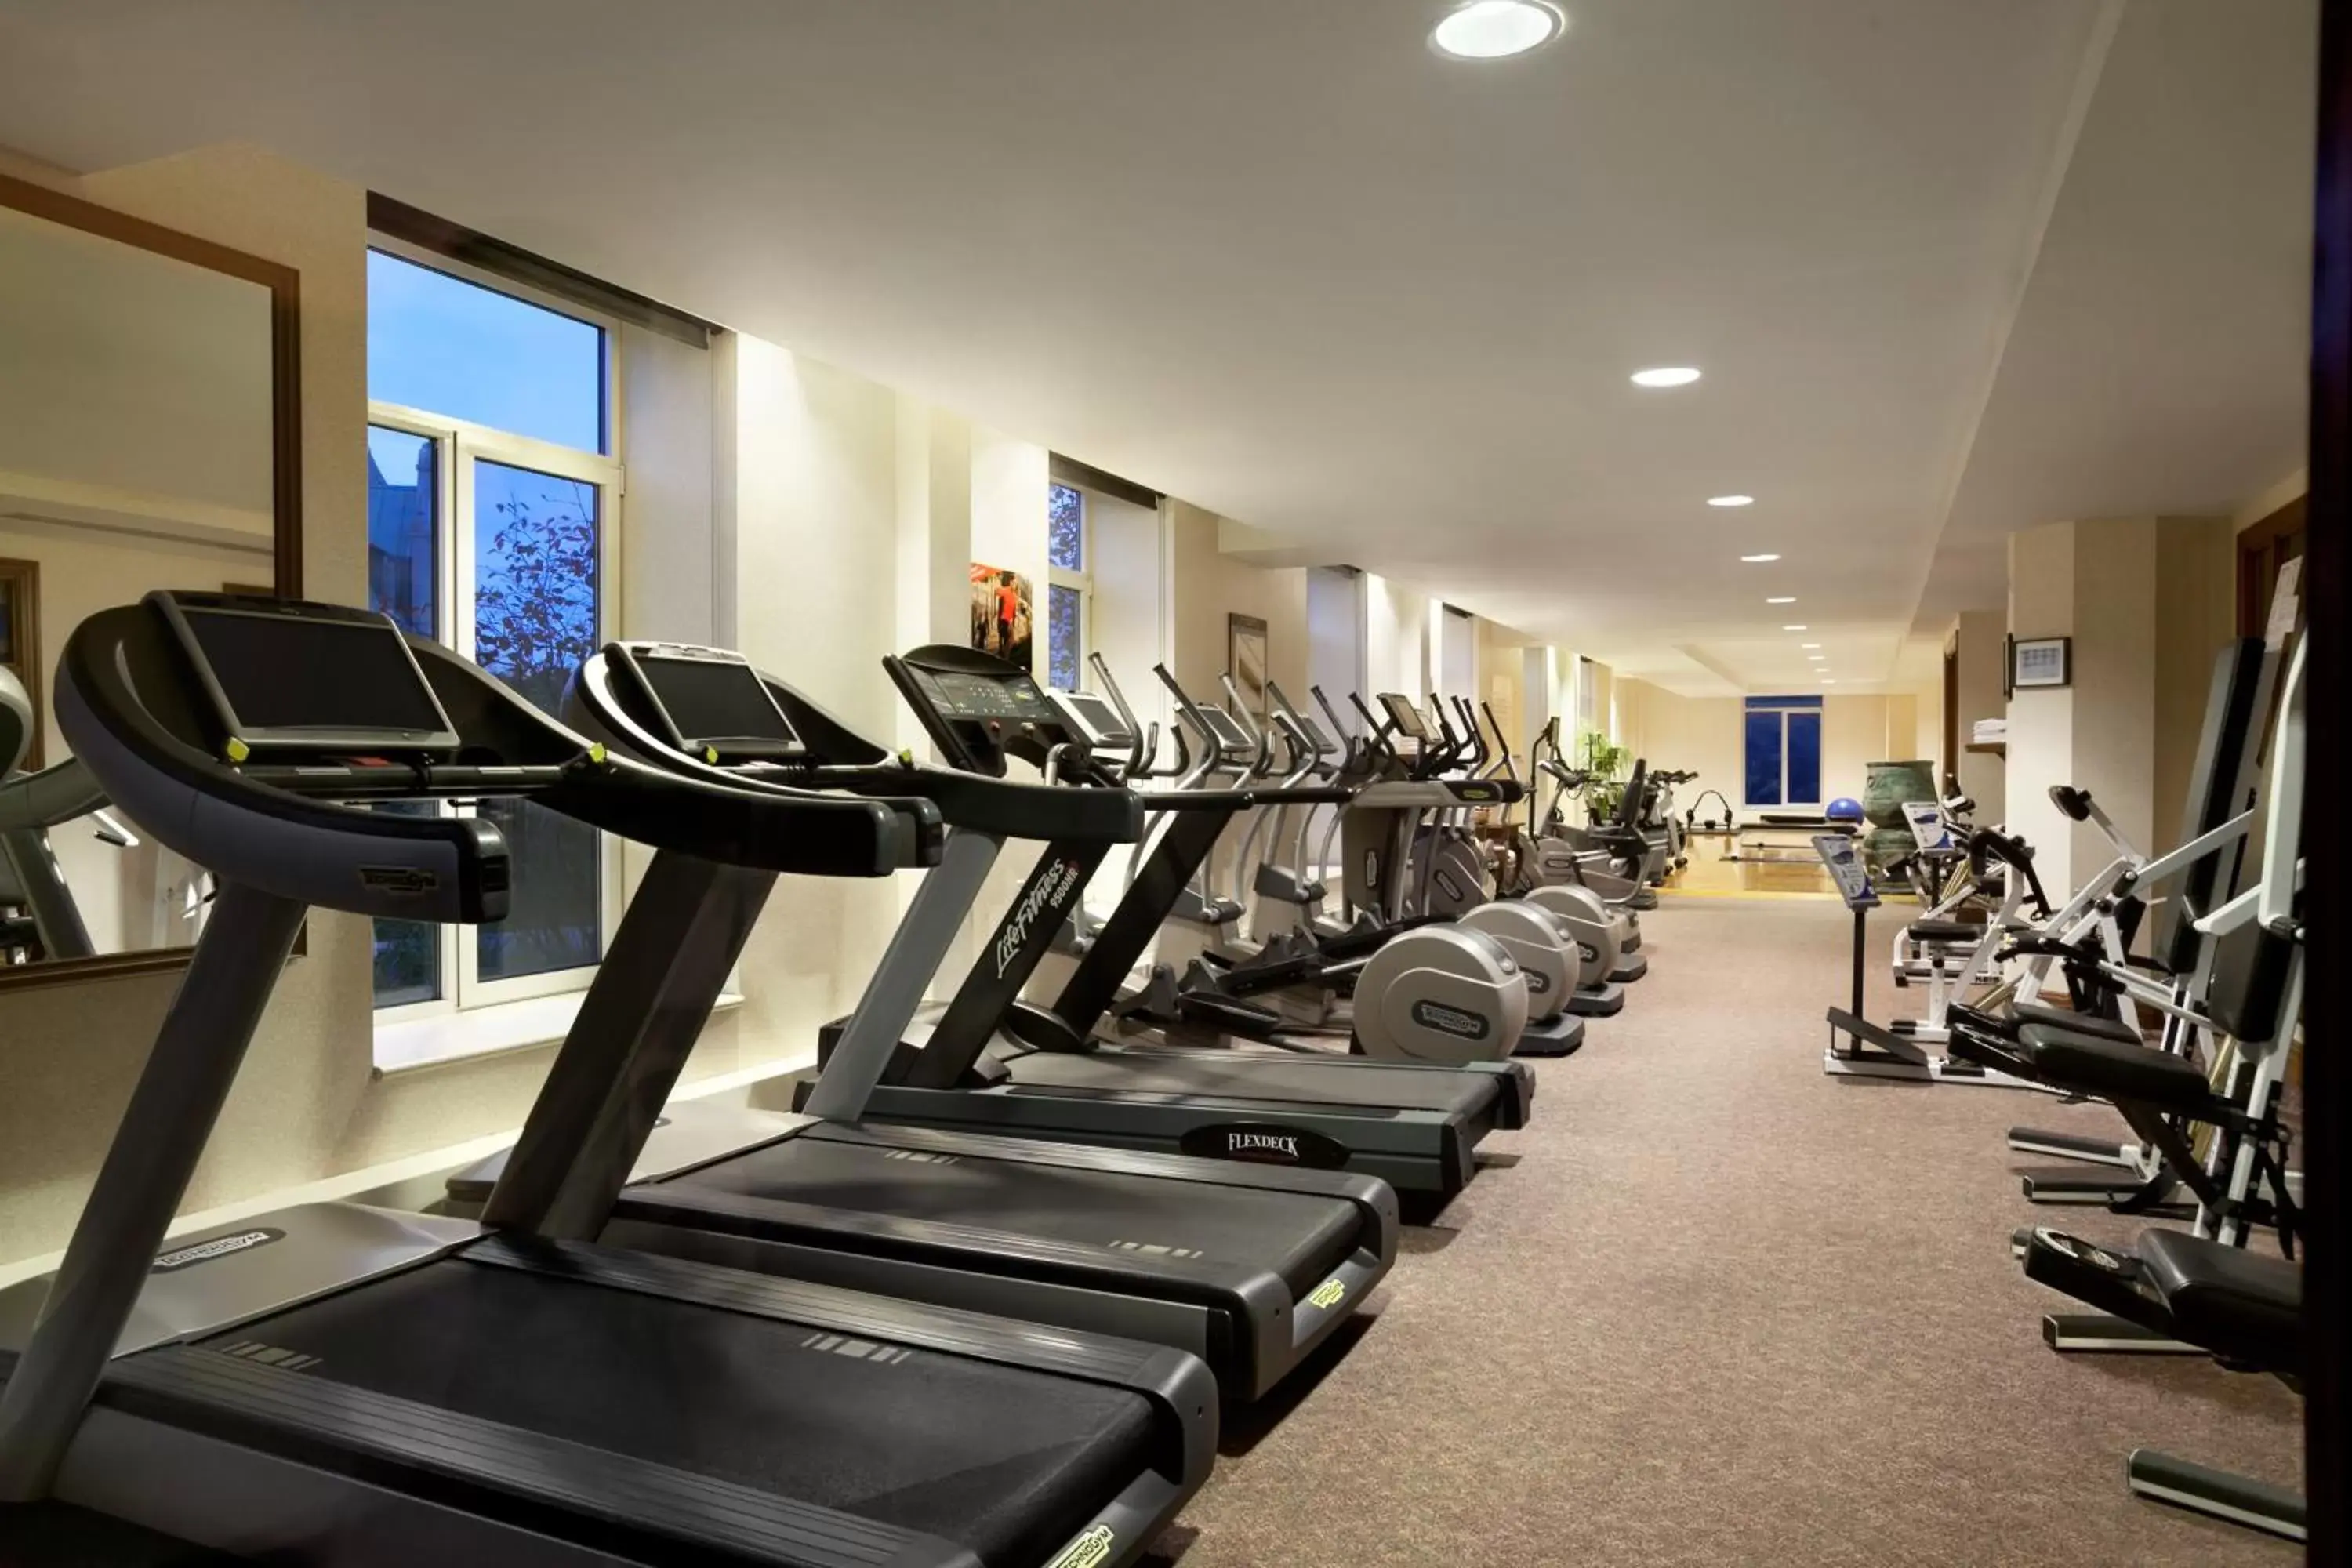 Fitness centre/facilities, Fitness Center/Facilities in Fairmont Le Manoir Richelieu